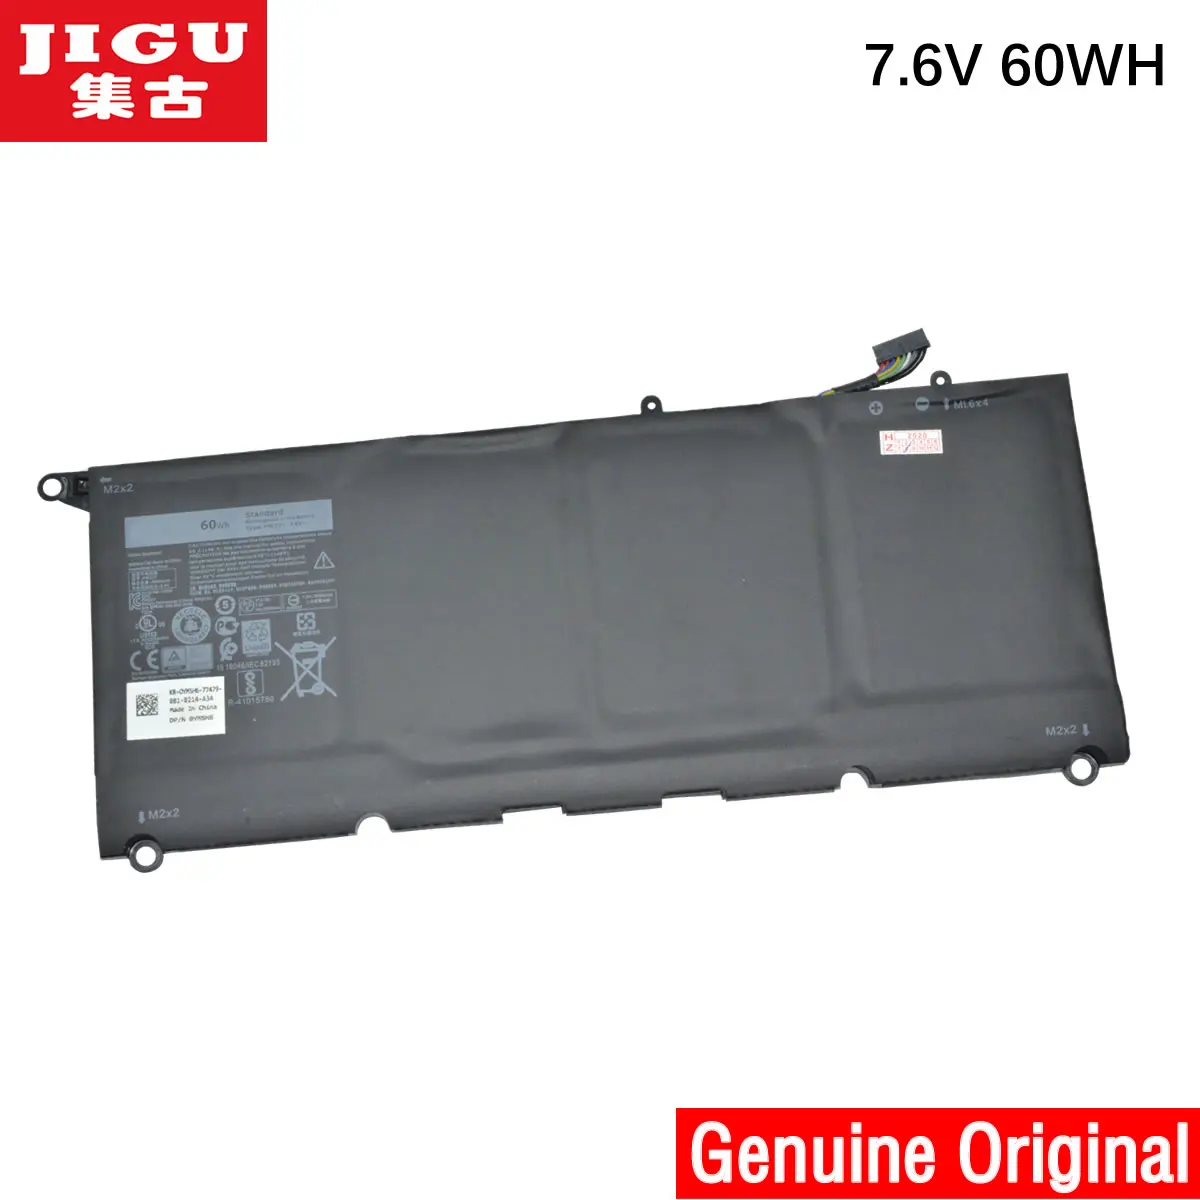 

JIGU 7.6V 60WH Original Tablet Battery PW23Y TP1GT RNP72 For Dell XPS 13 9360 D1505 D1505G D1605T